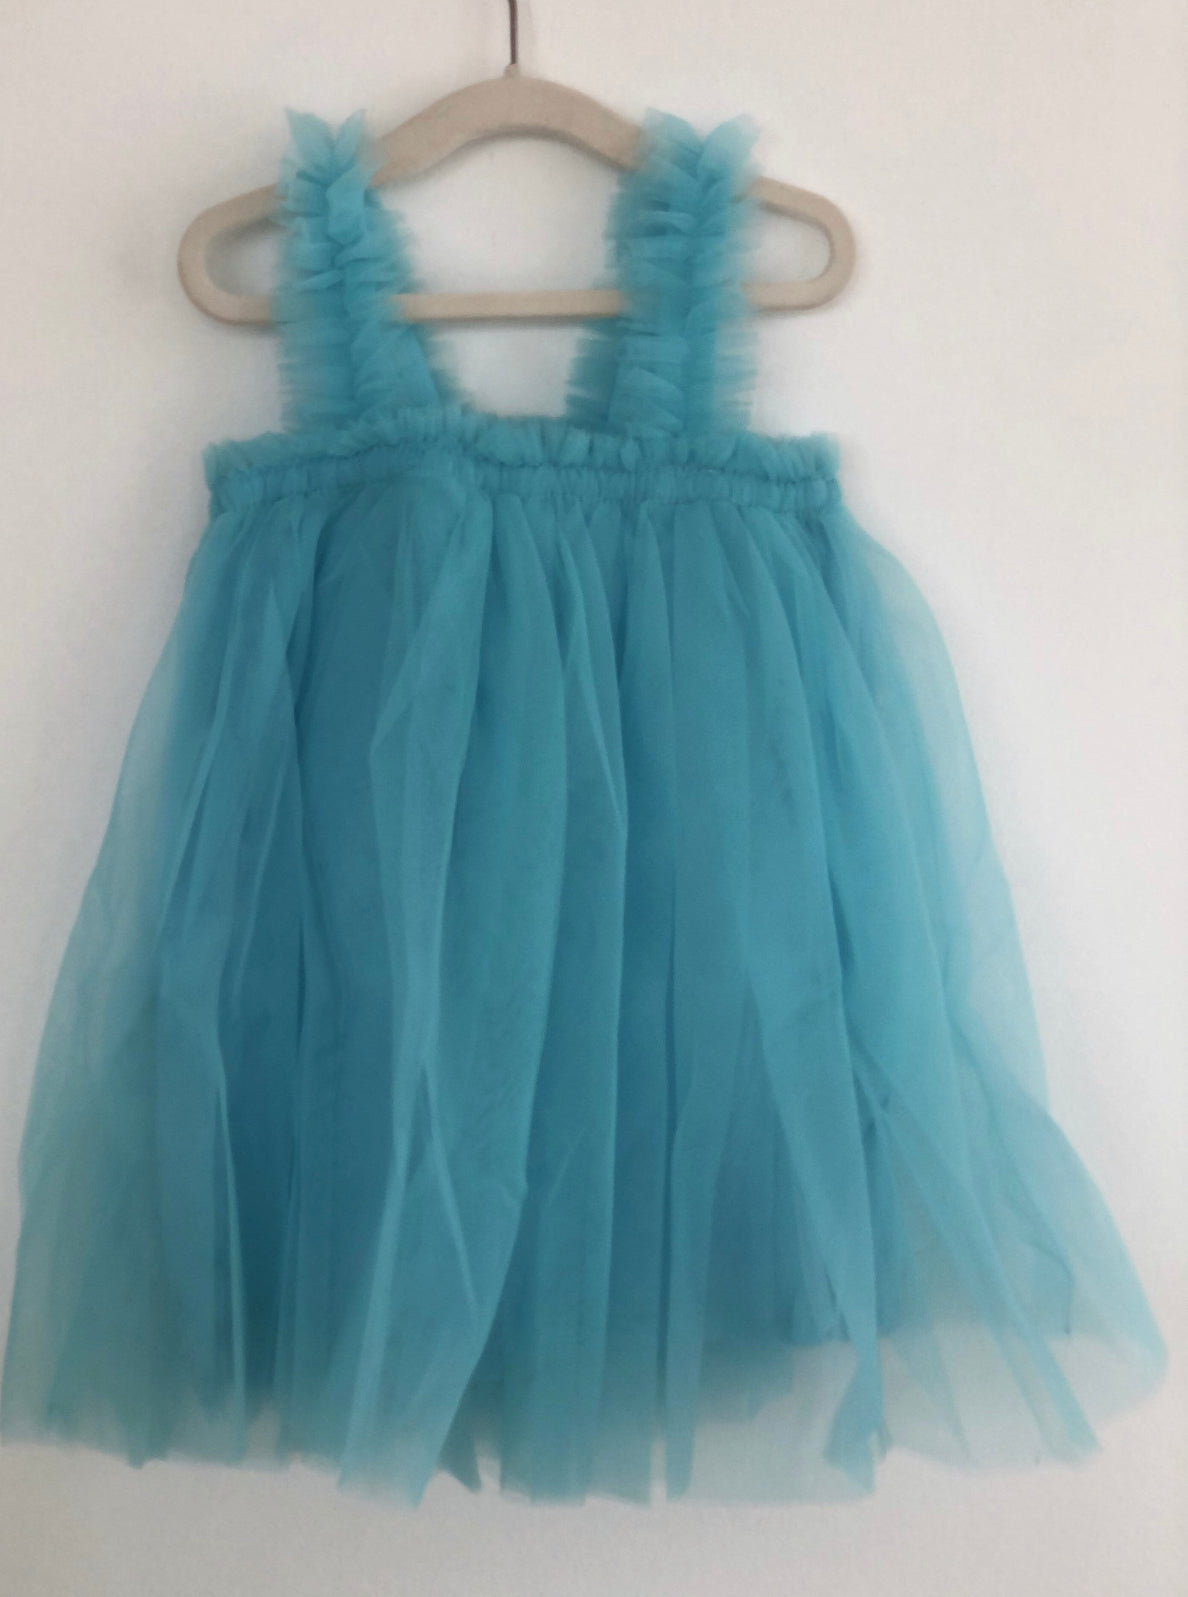 Plain Turquoise Baby Tulle Dress